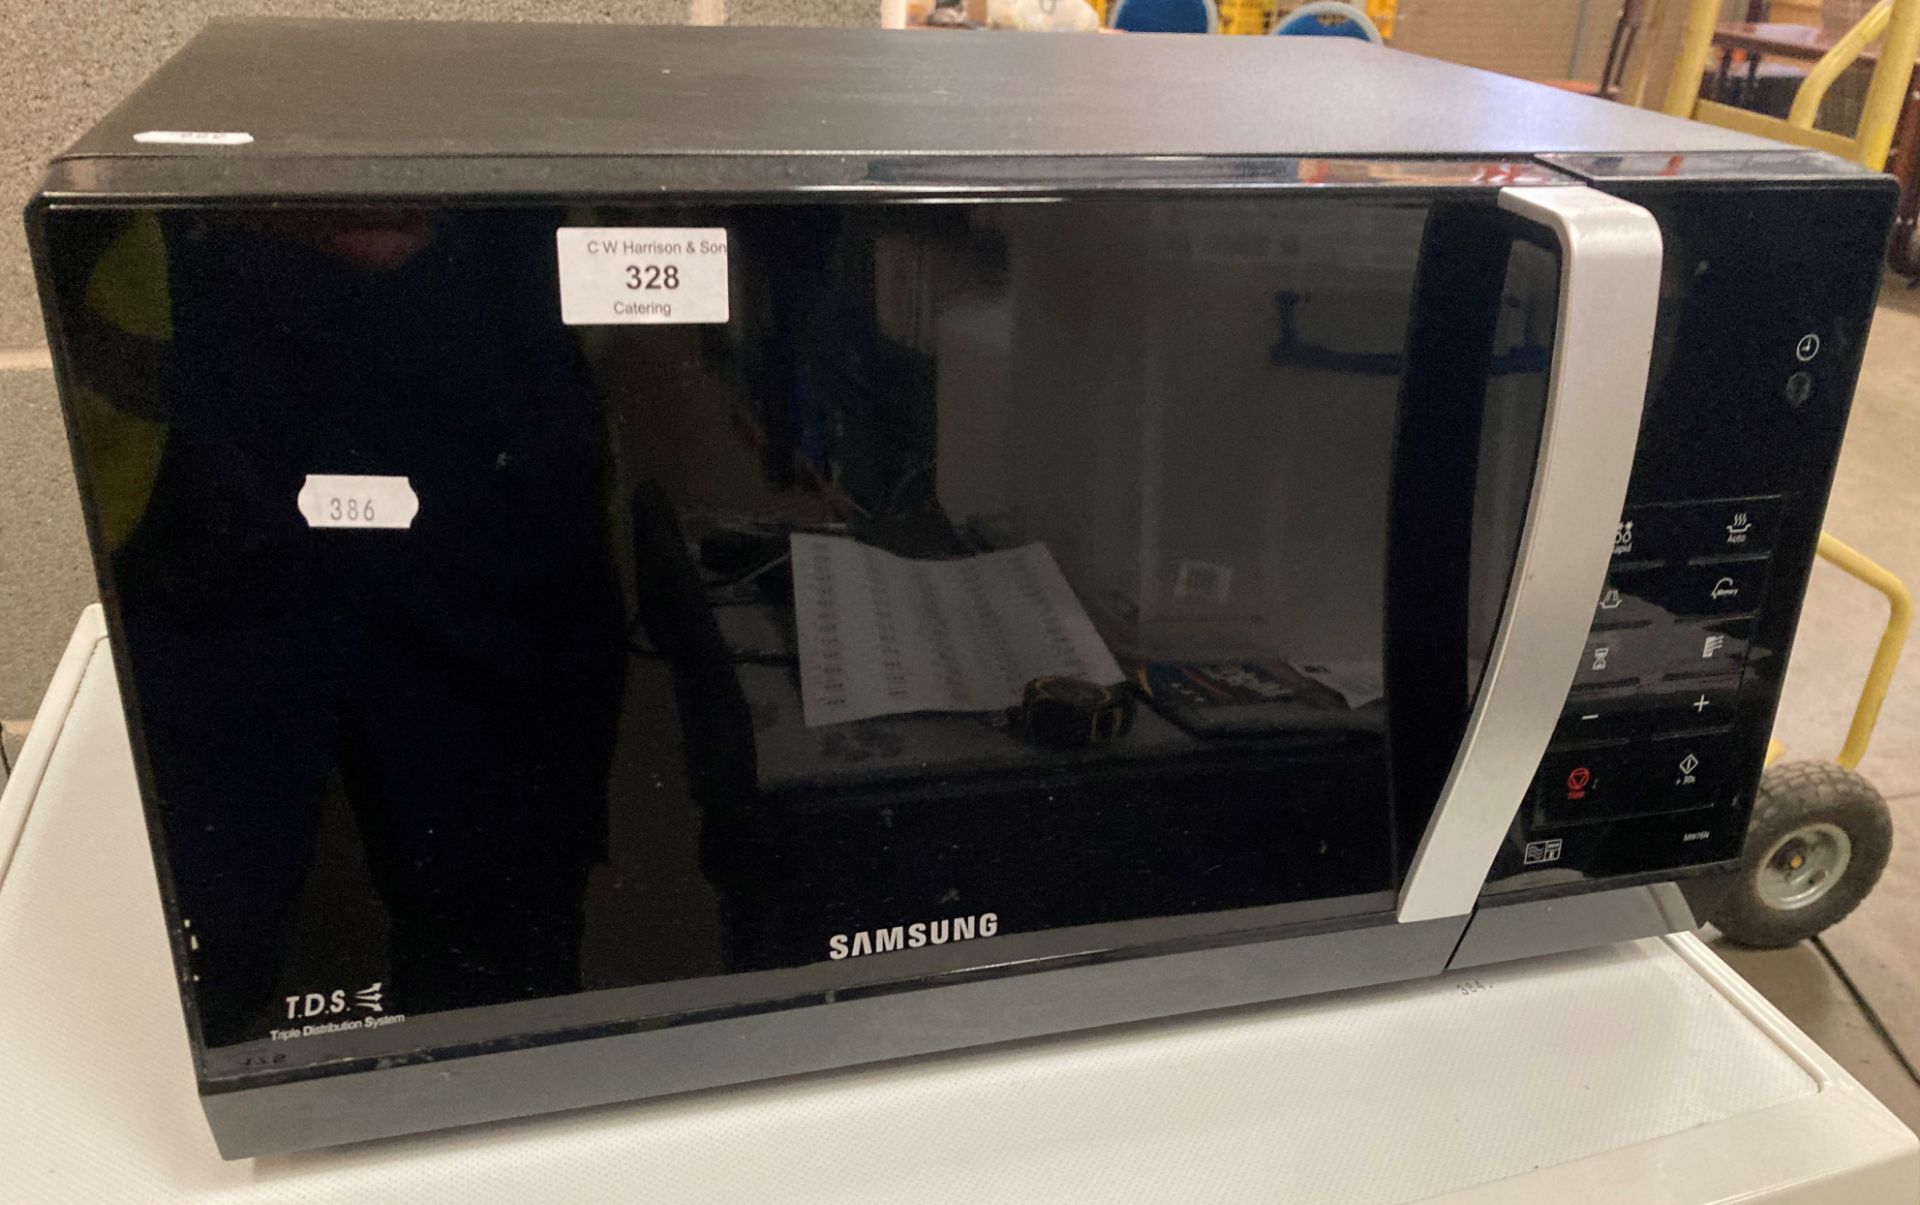 Samsung TDS microwave oven (saleroom location: PO)